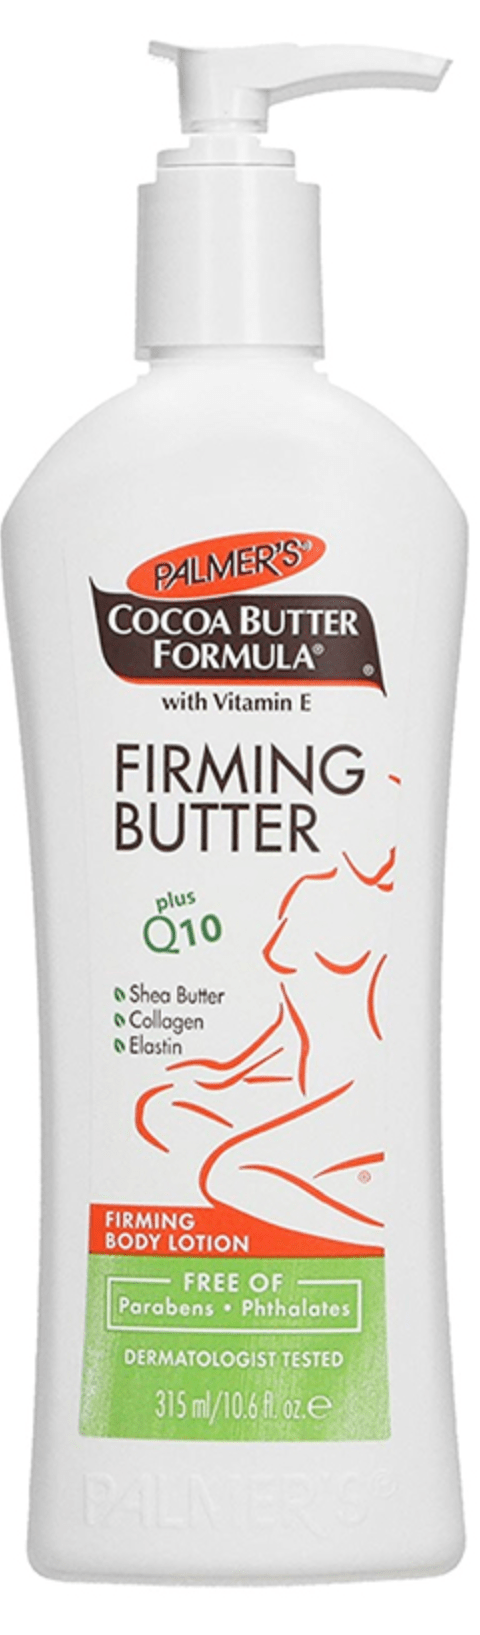 Palmer's - Cocoa Butter Formula - Firming Butter Milk - 315ml - Palmer's - Ethni Beauty Market